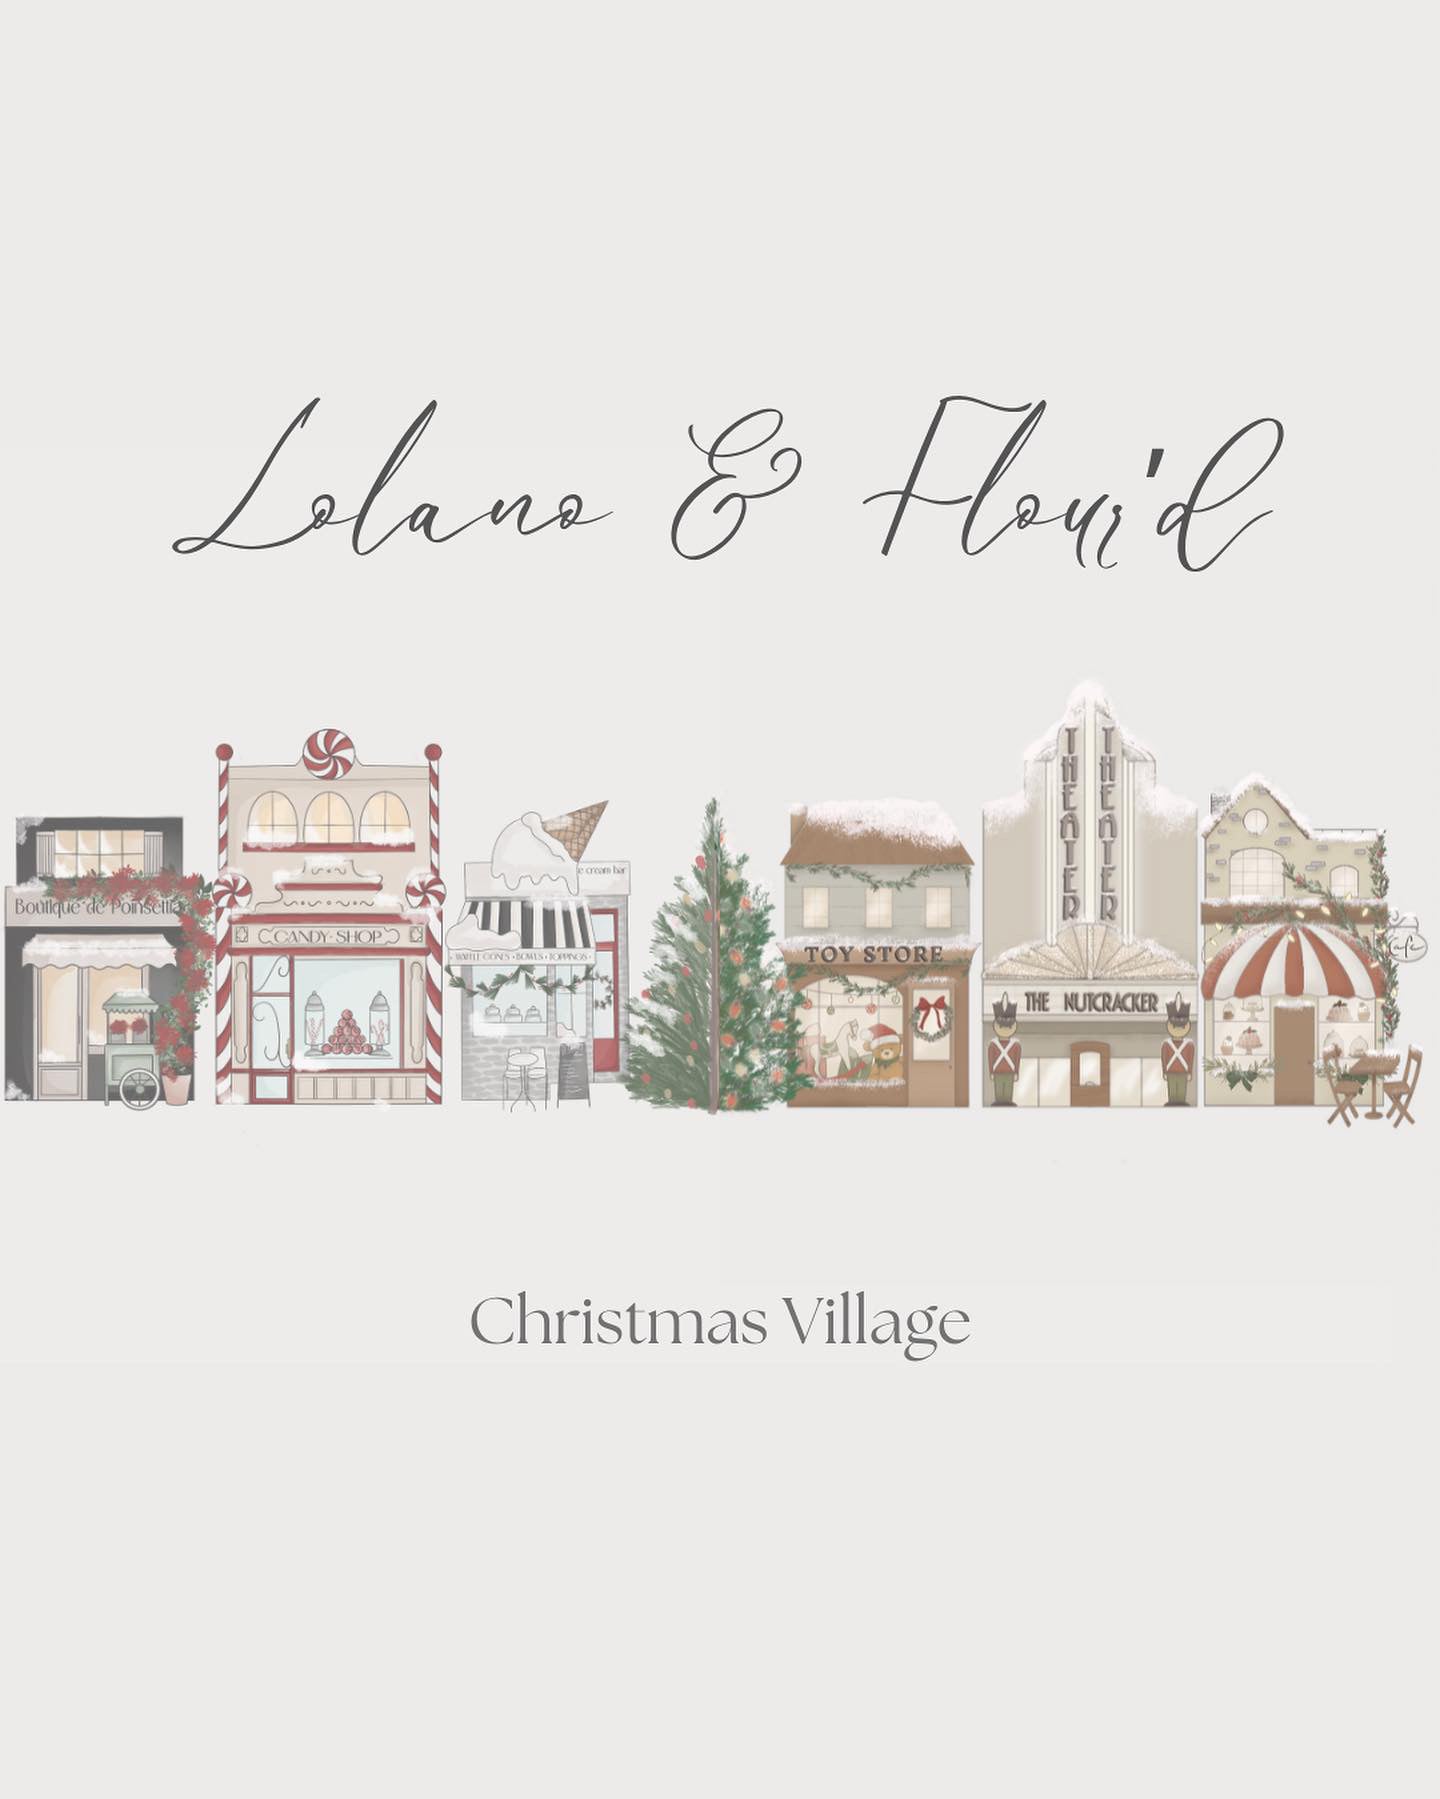 Lolano X Flour'd Christmas Village STL flies